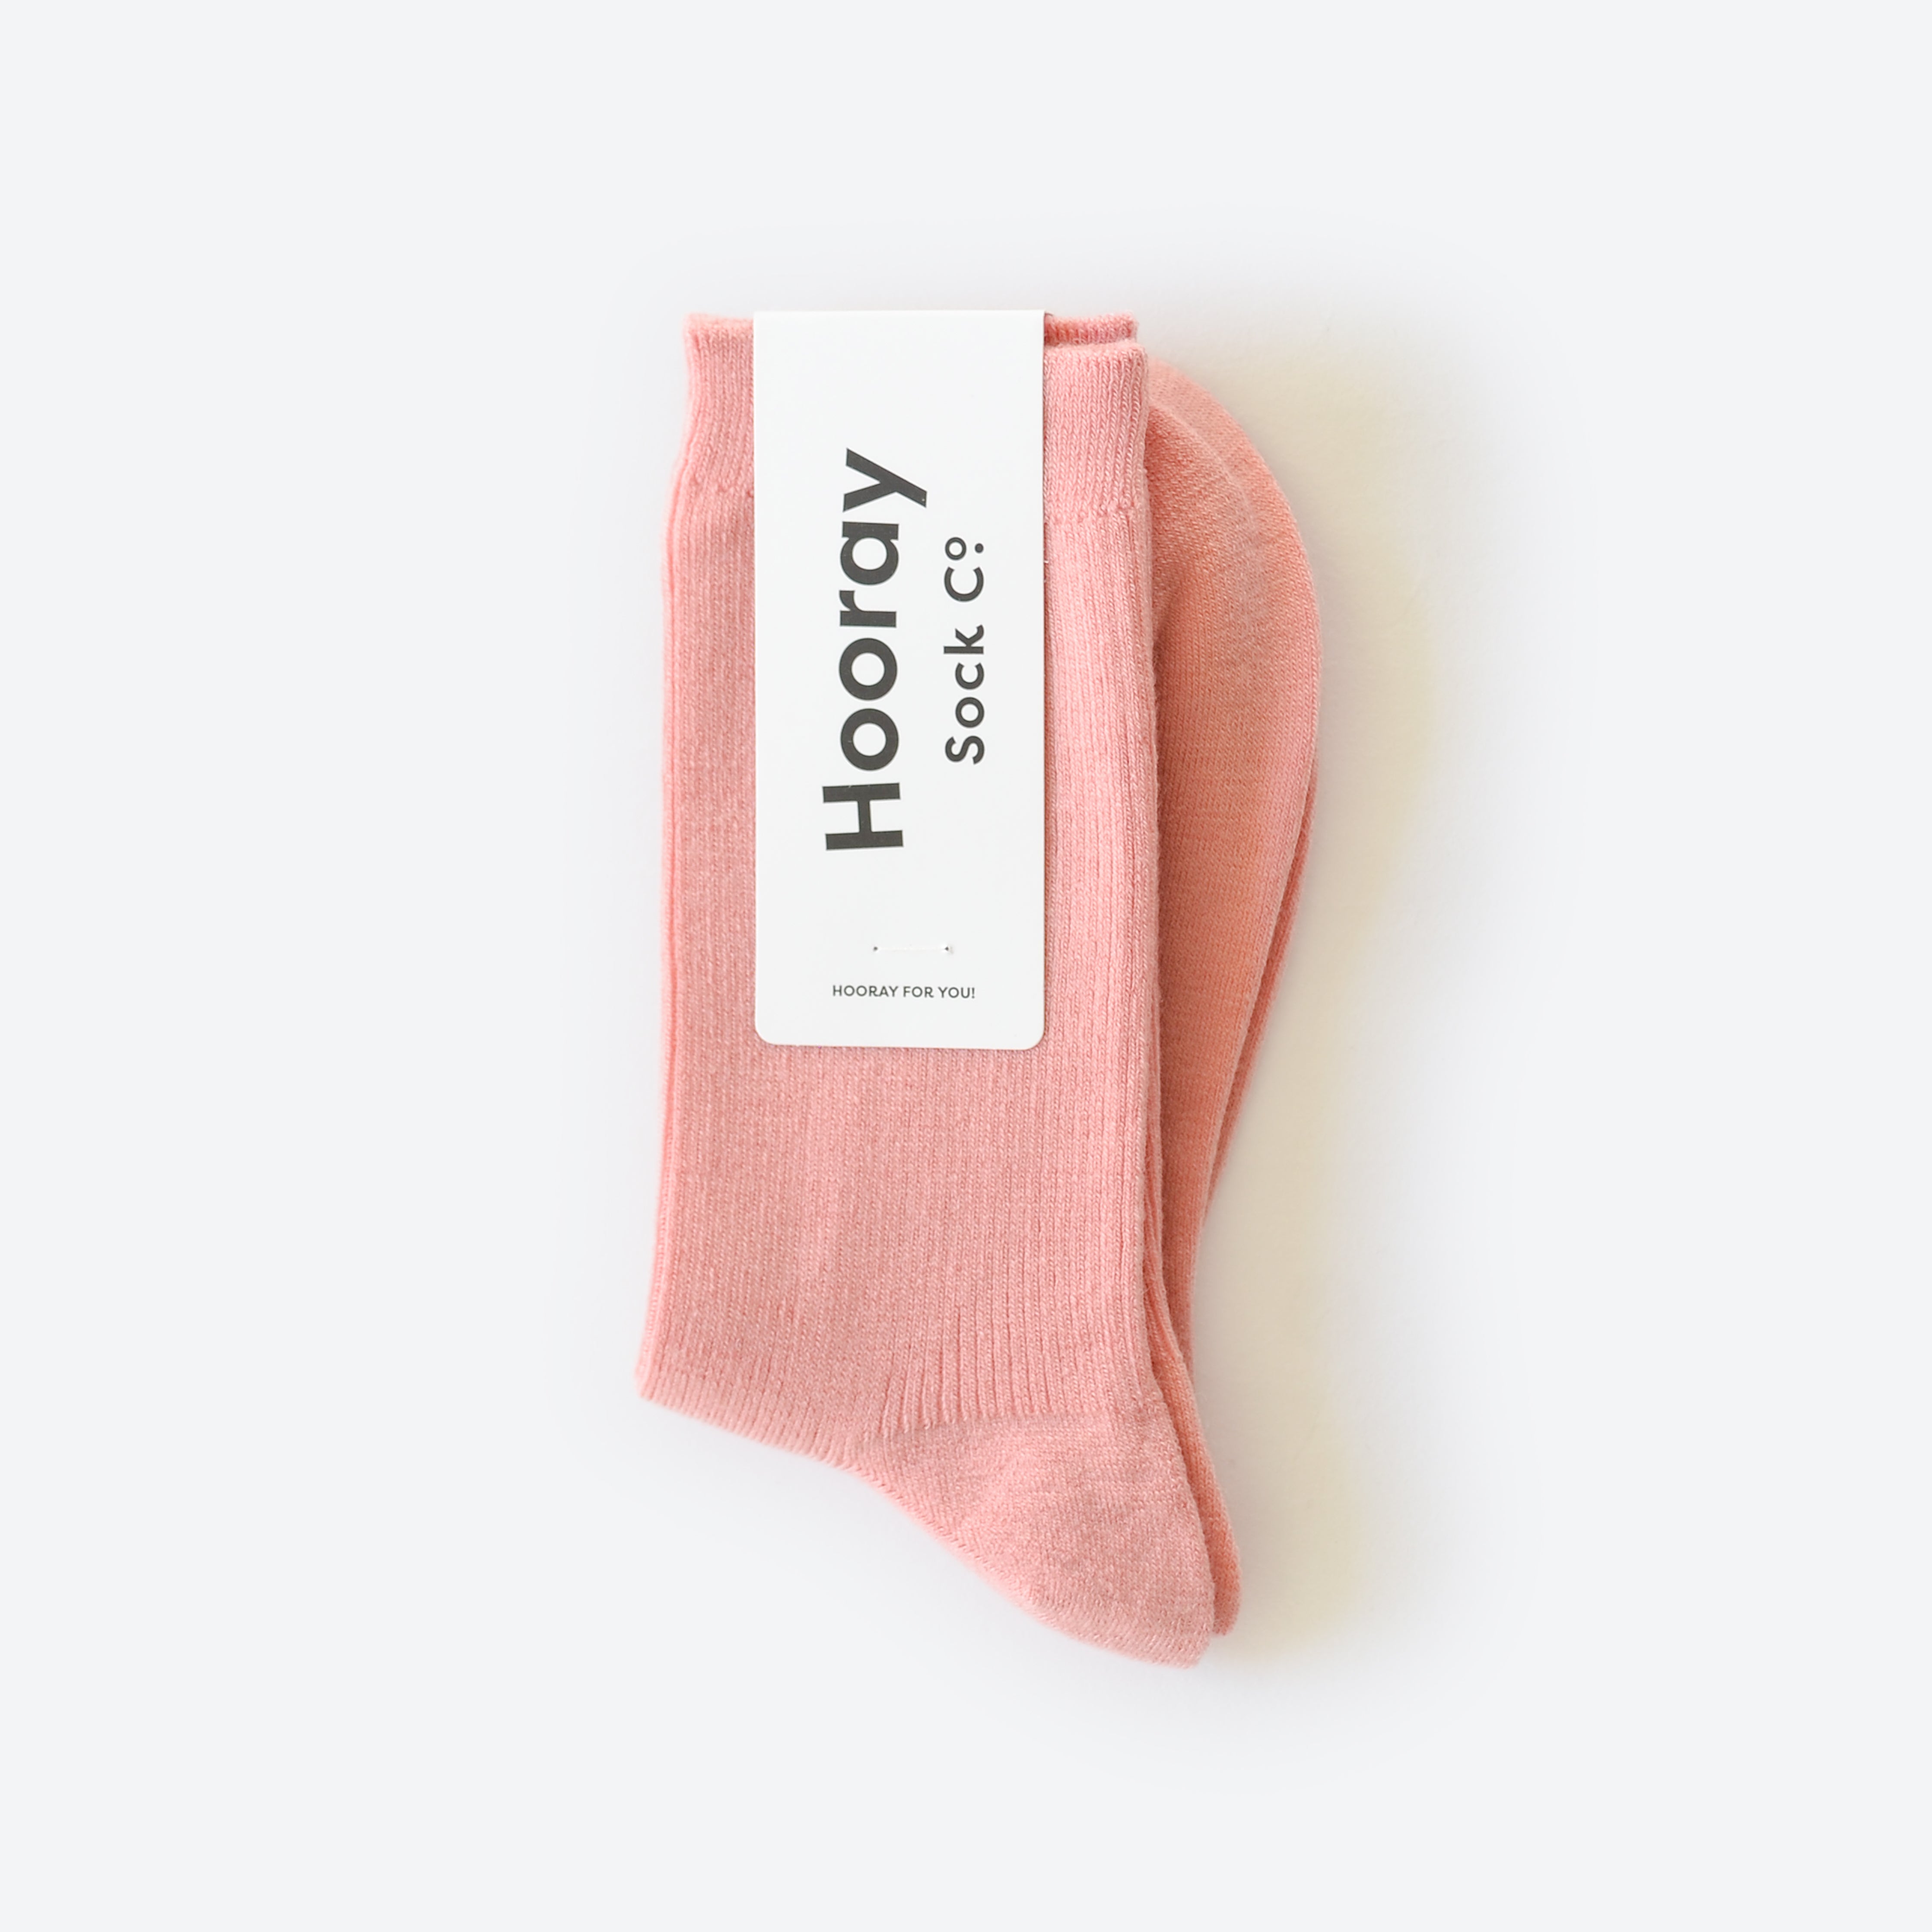 Hooray Sock Co. Blush Merino Wool Crew Socks. Soft, comfy, chic. Short crew in Blush Pink. 20% Merino Wool.